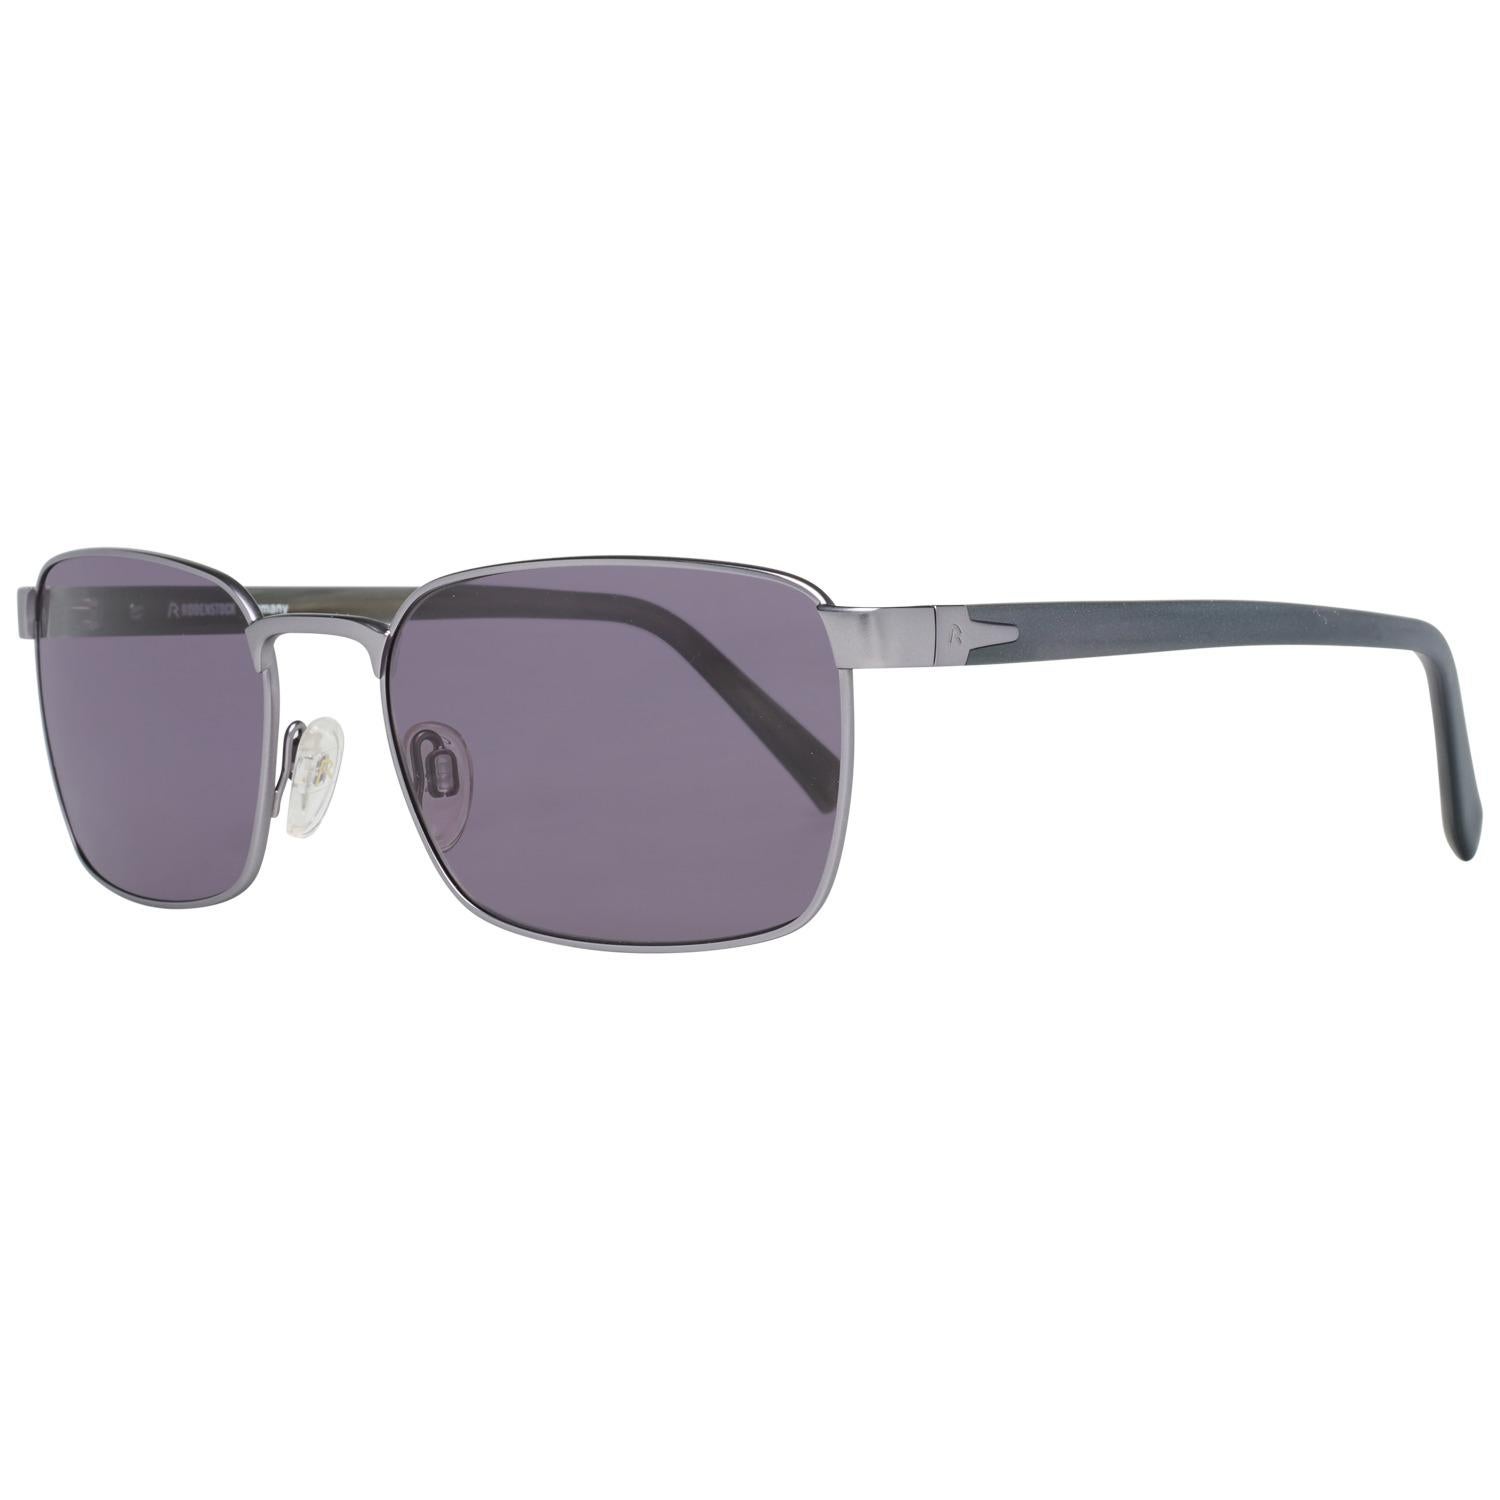 Rodenstock Mint Unisex Silver Sunglasses R1417 D 56 56-19-140 mm 2